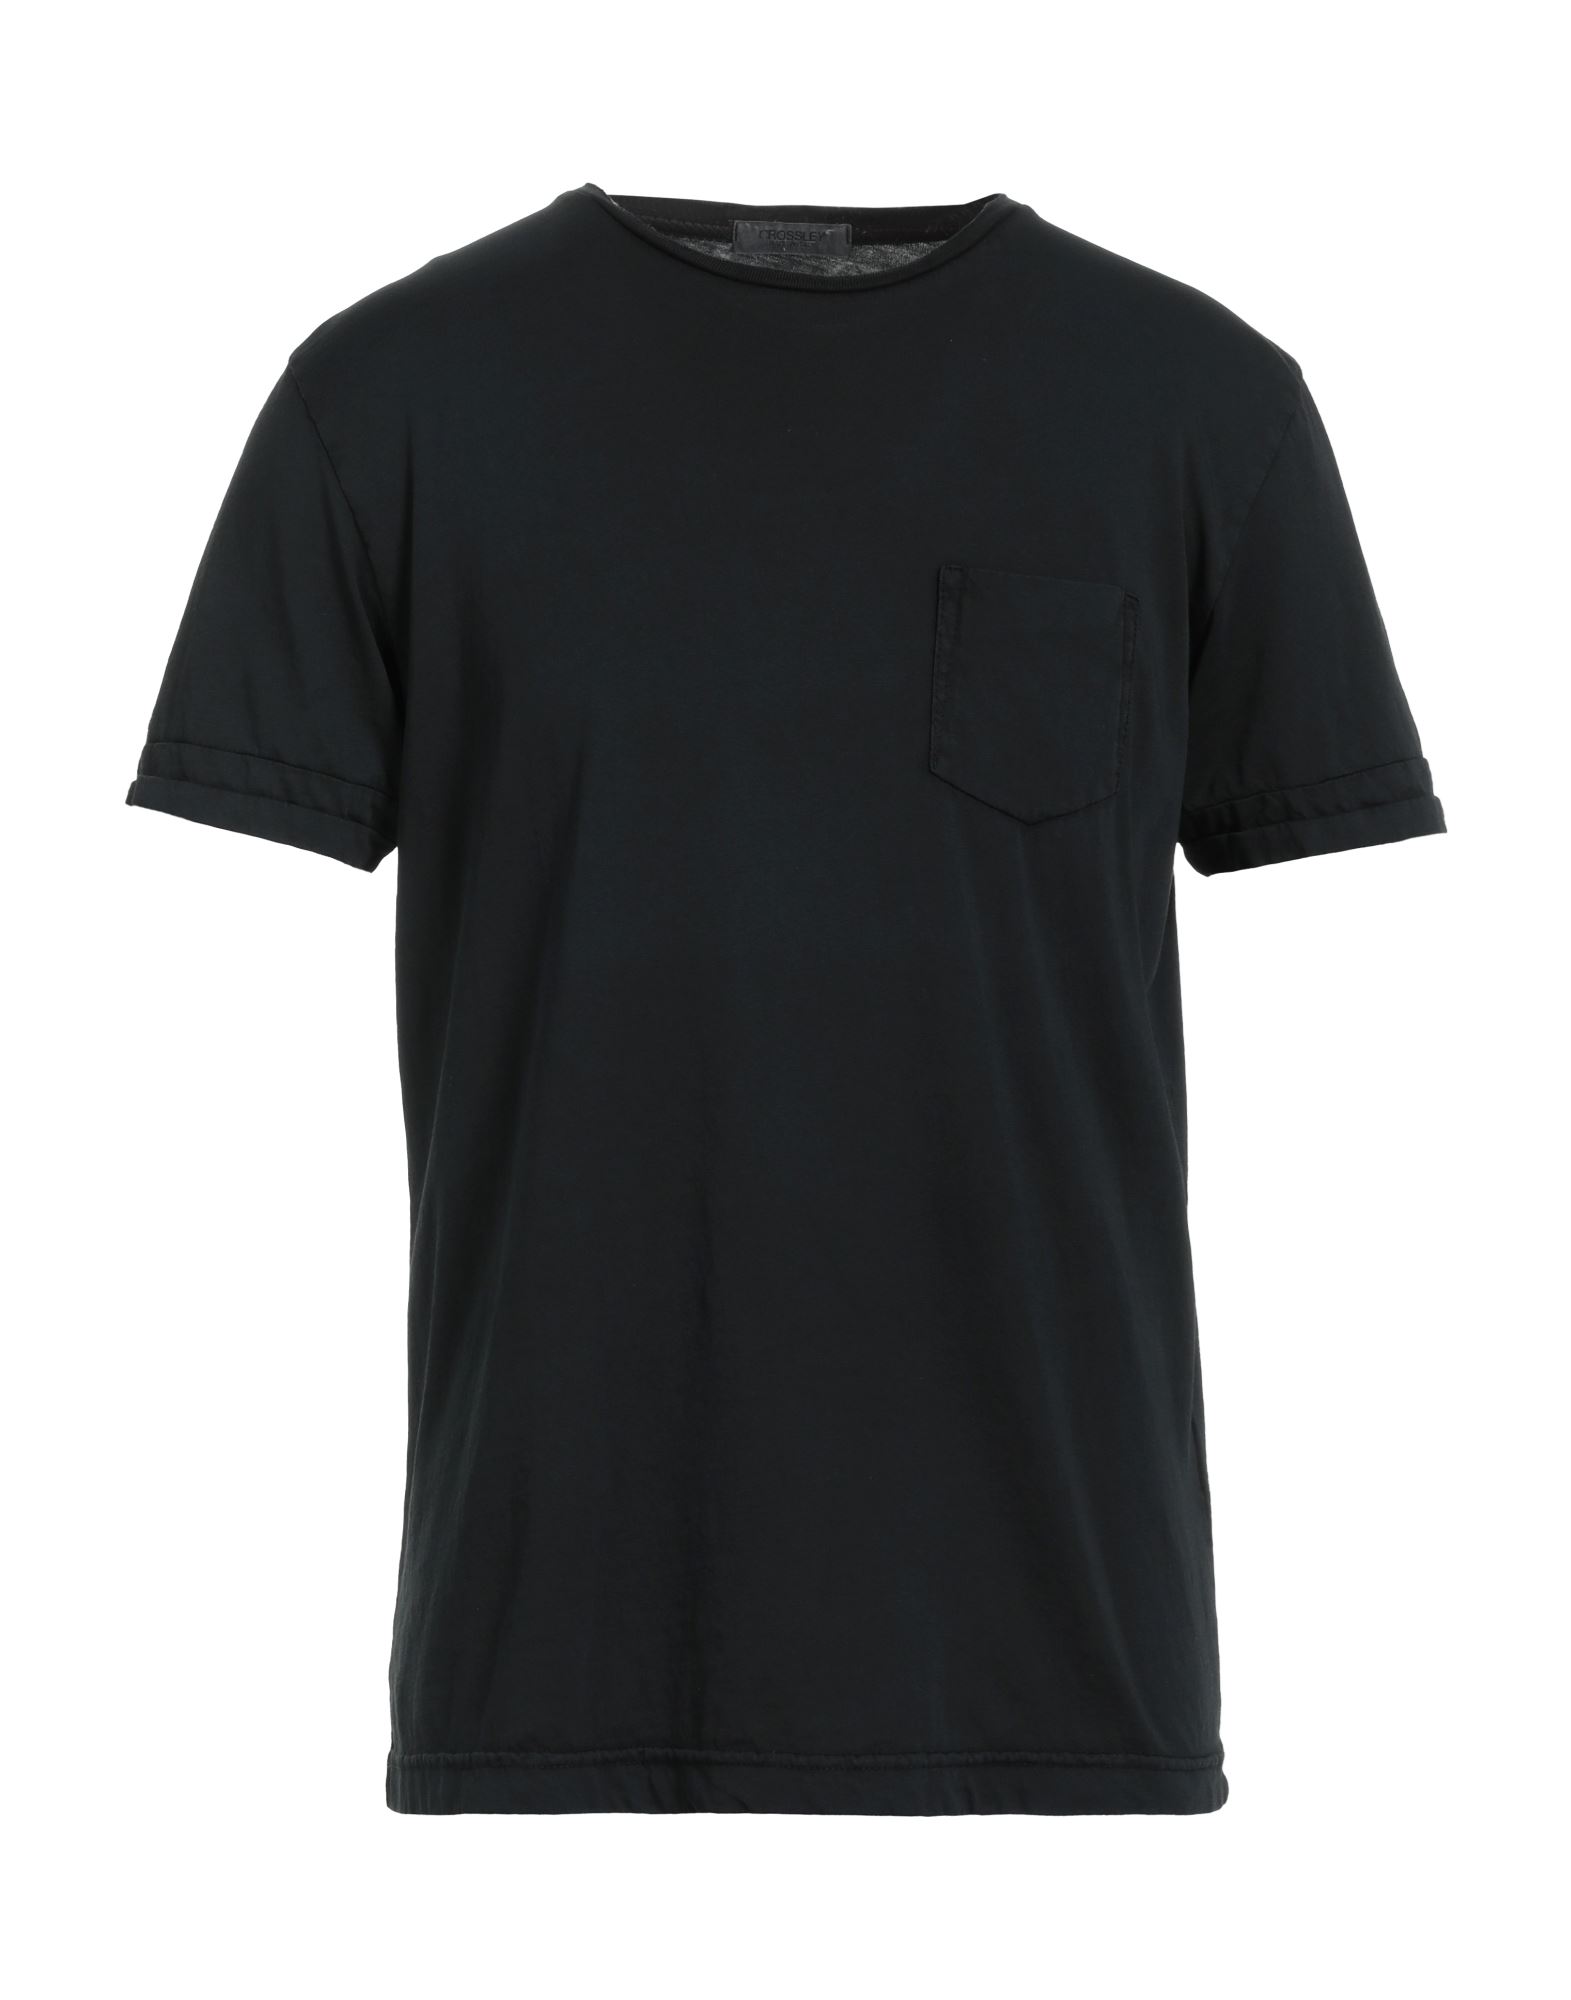 Crossley Man T-shirt Black Size Xxl Cotton